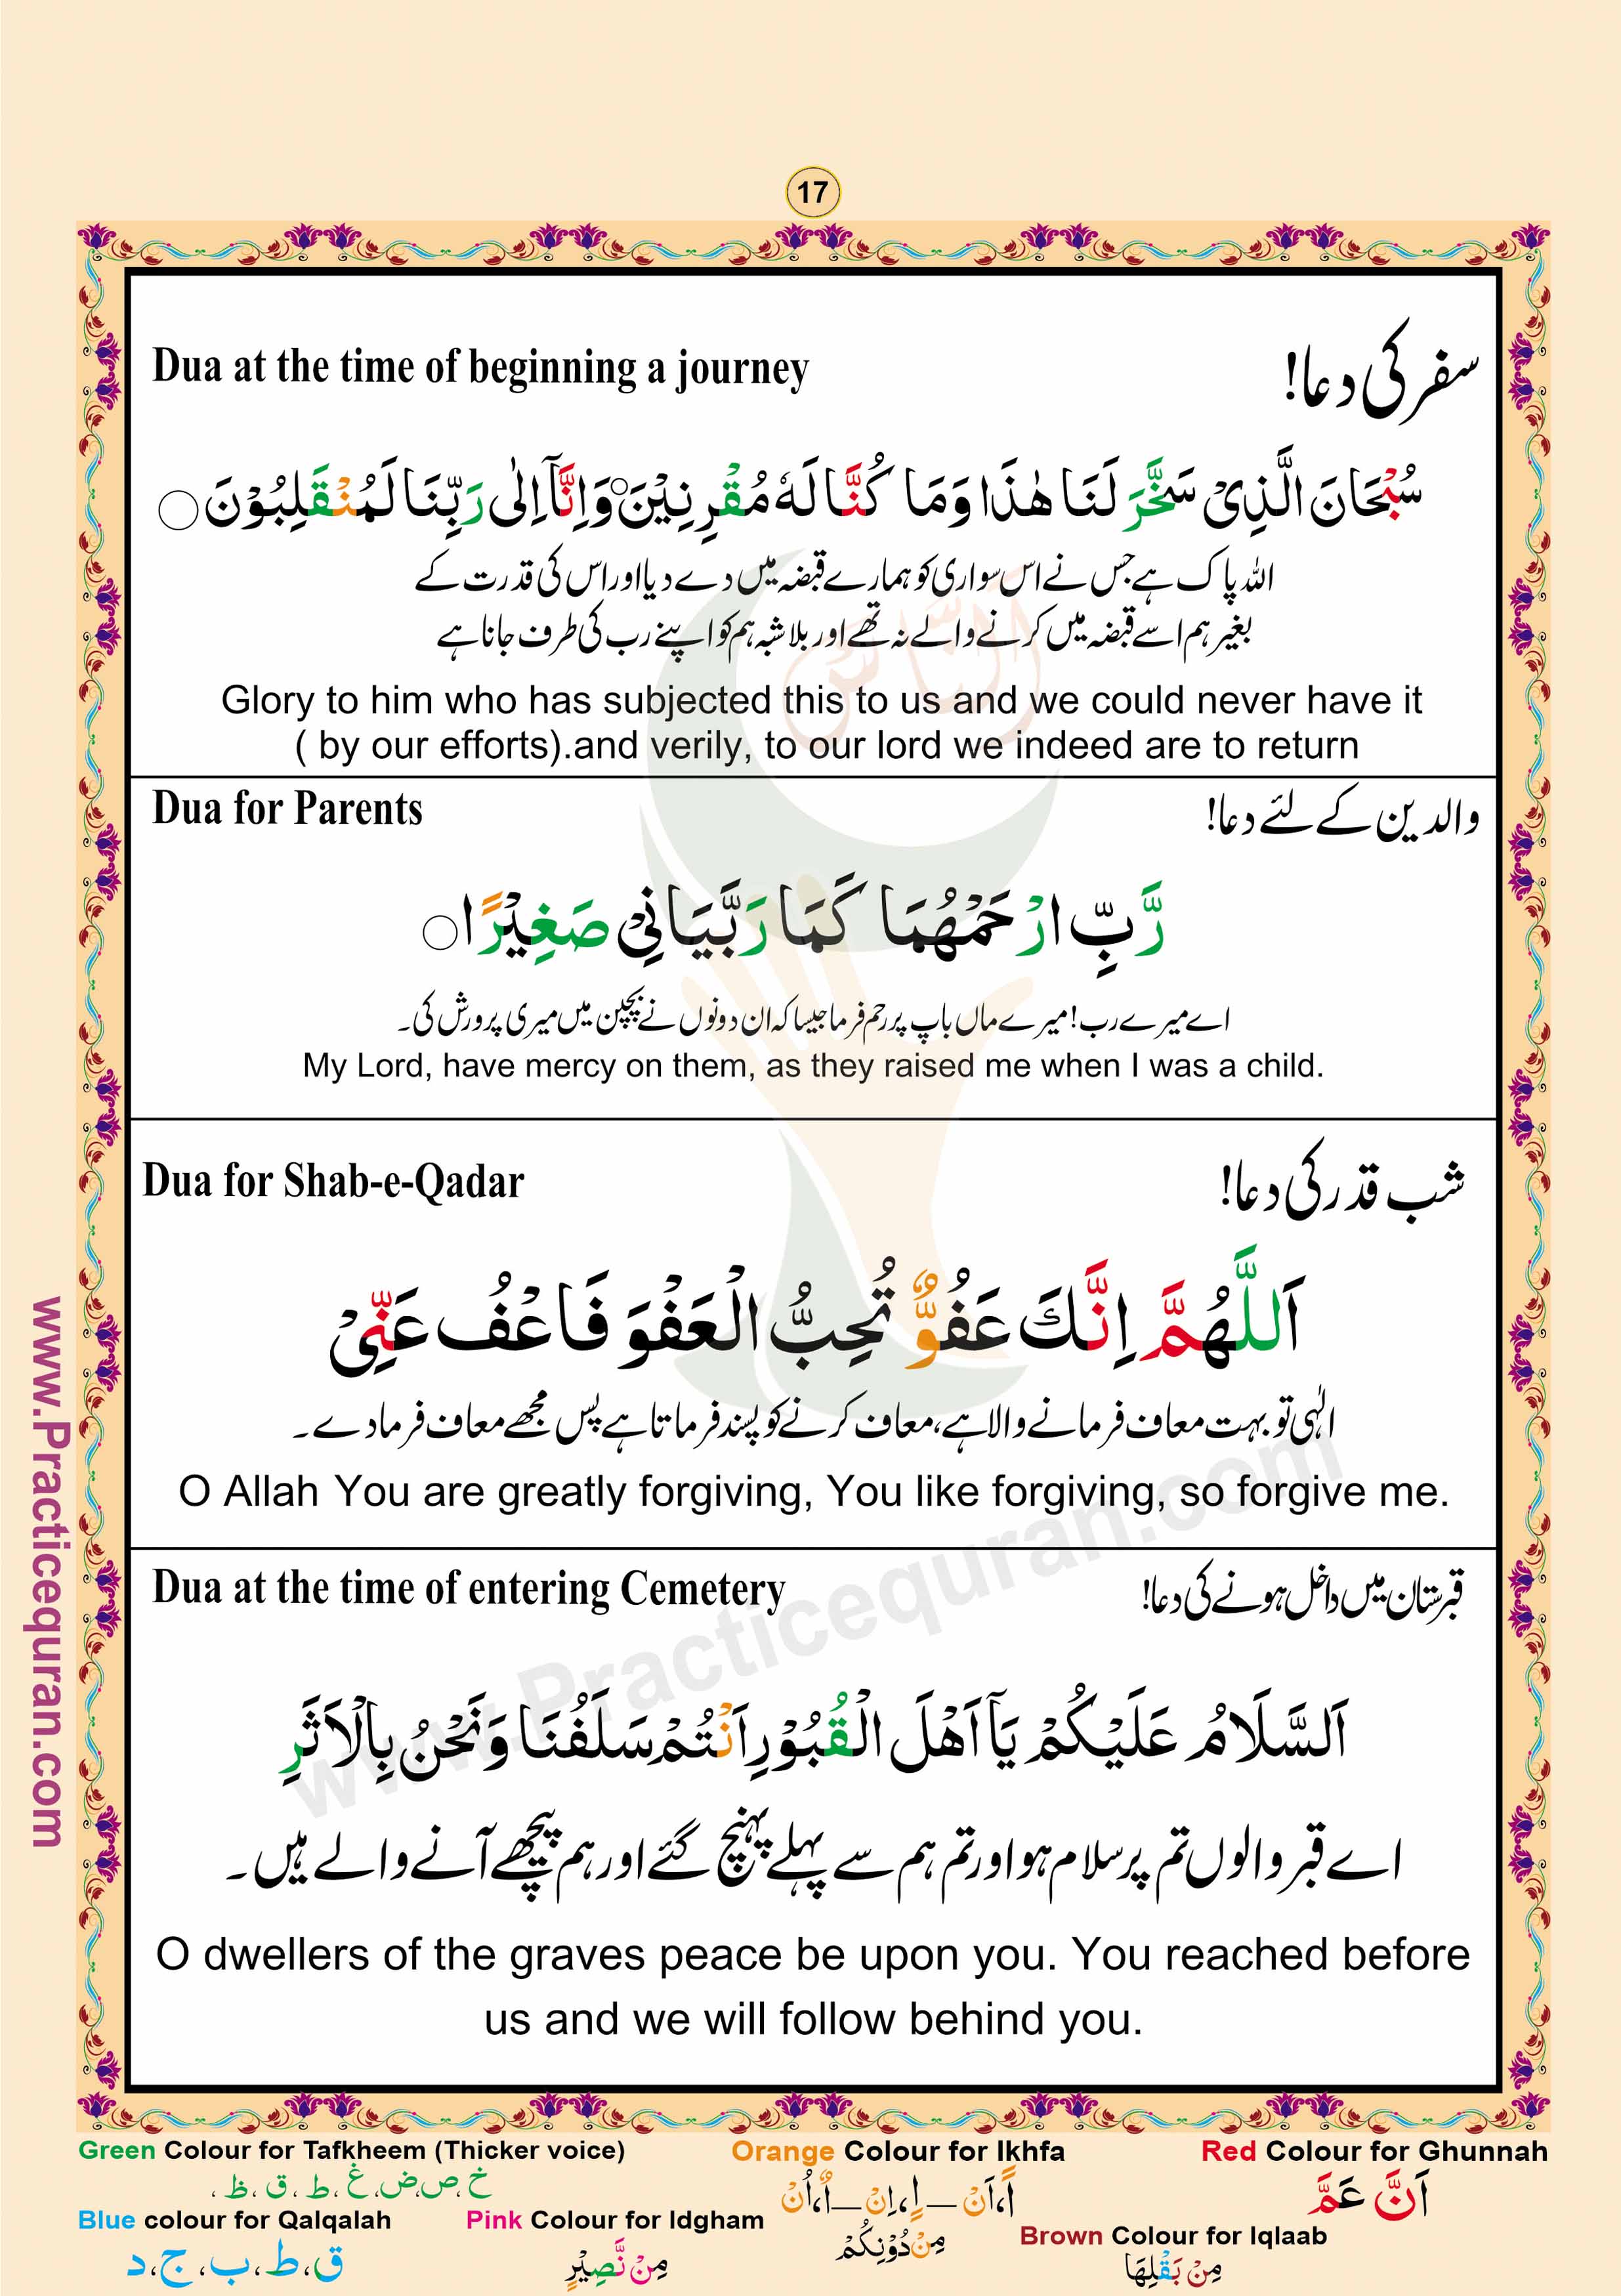 Read Namaz (Salah) Page No 17, Practice Quran